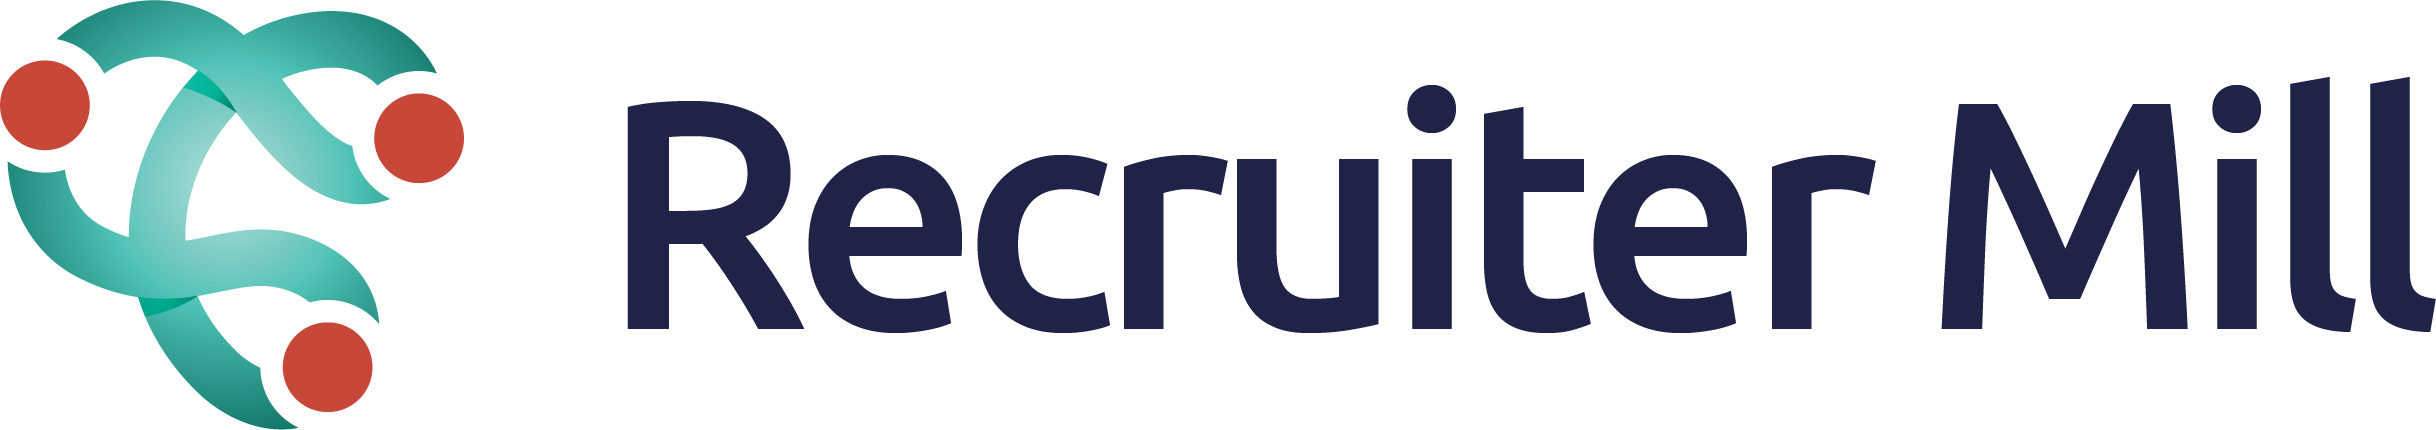 recruitermill logo